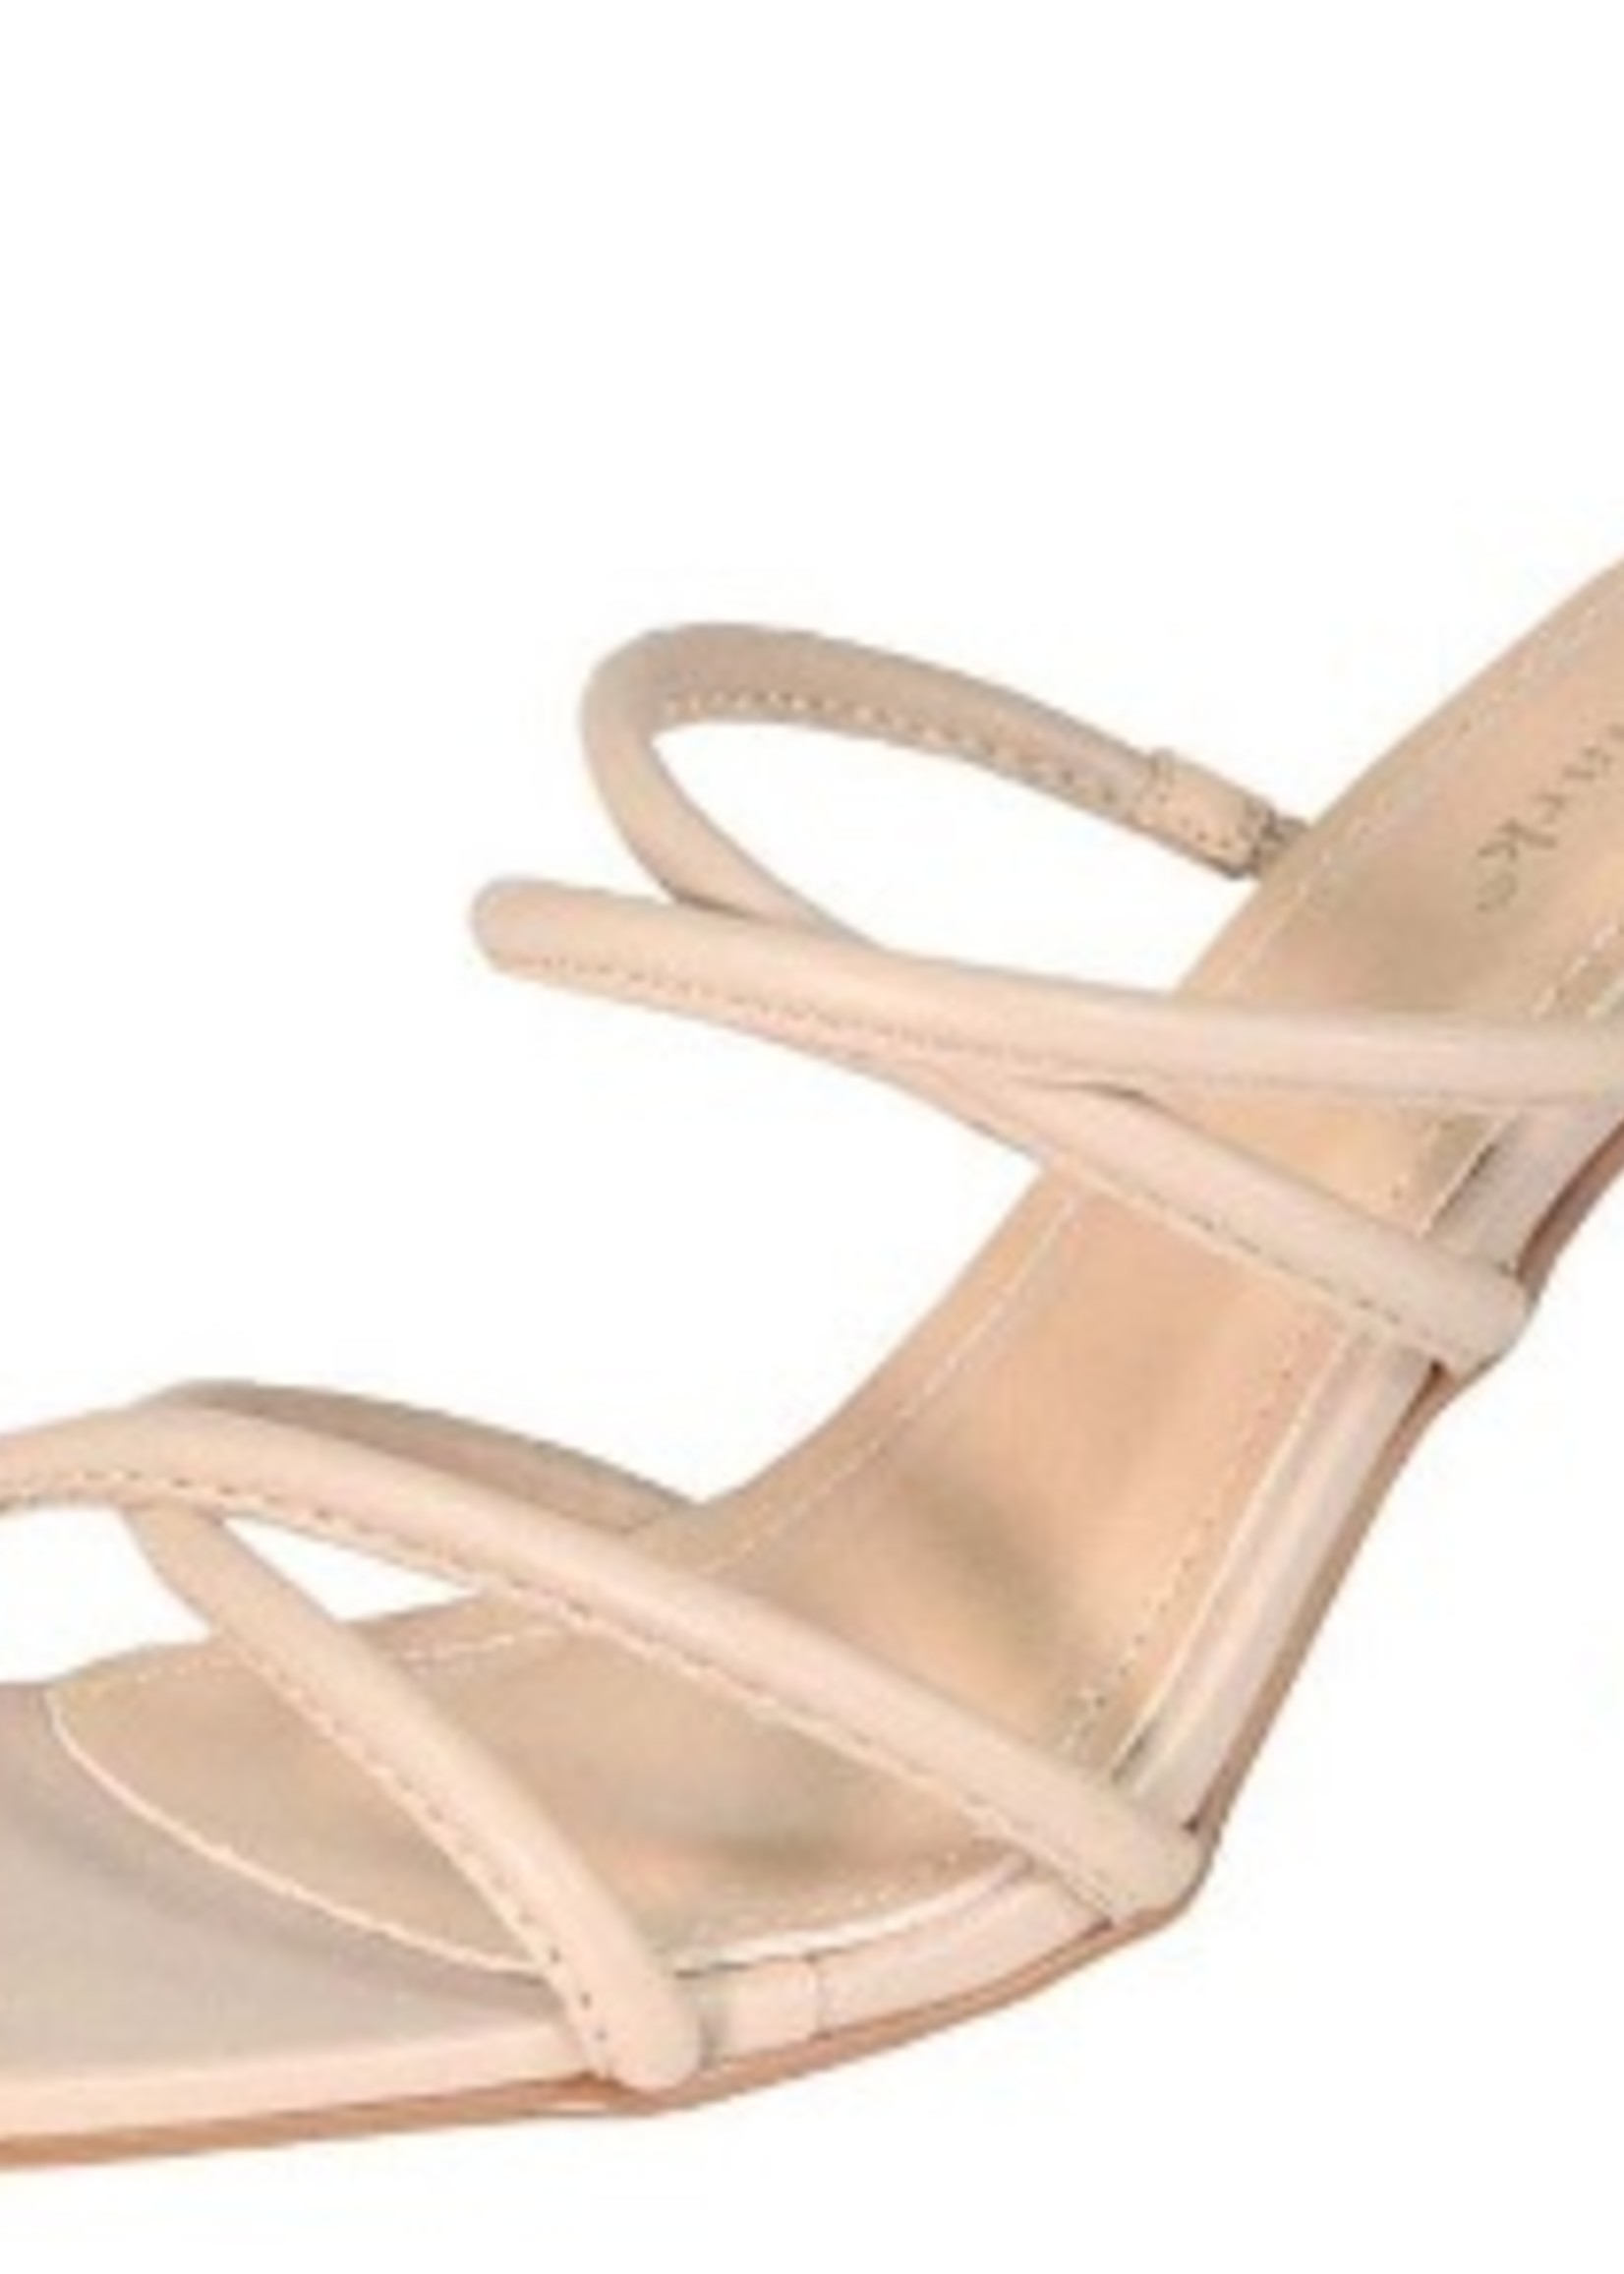 Strappy heel +2 colors